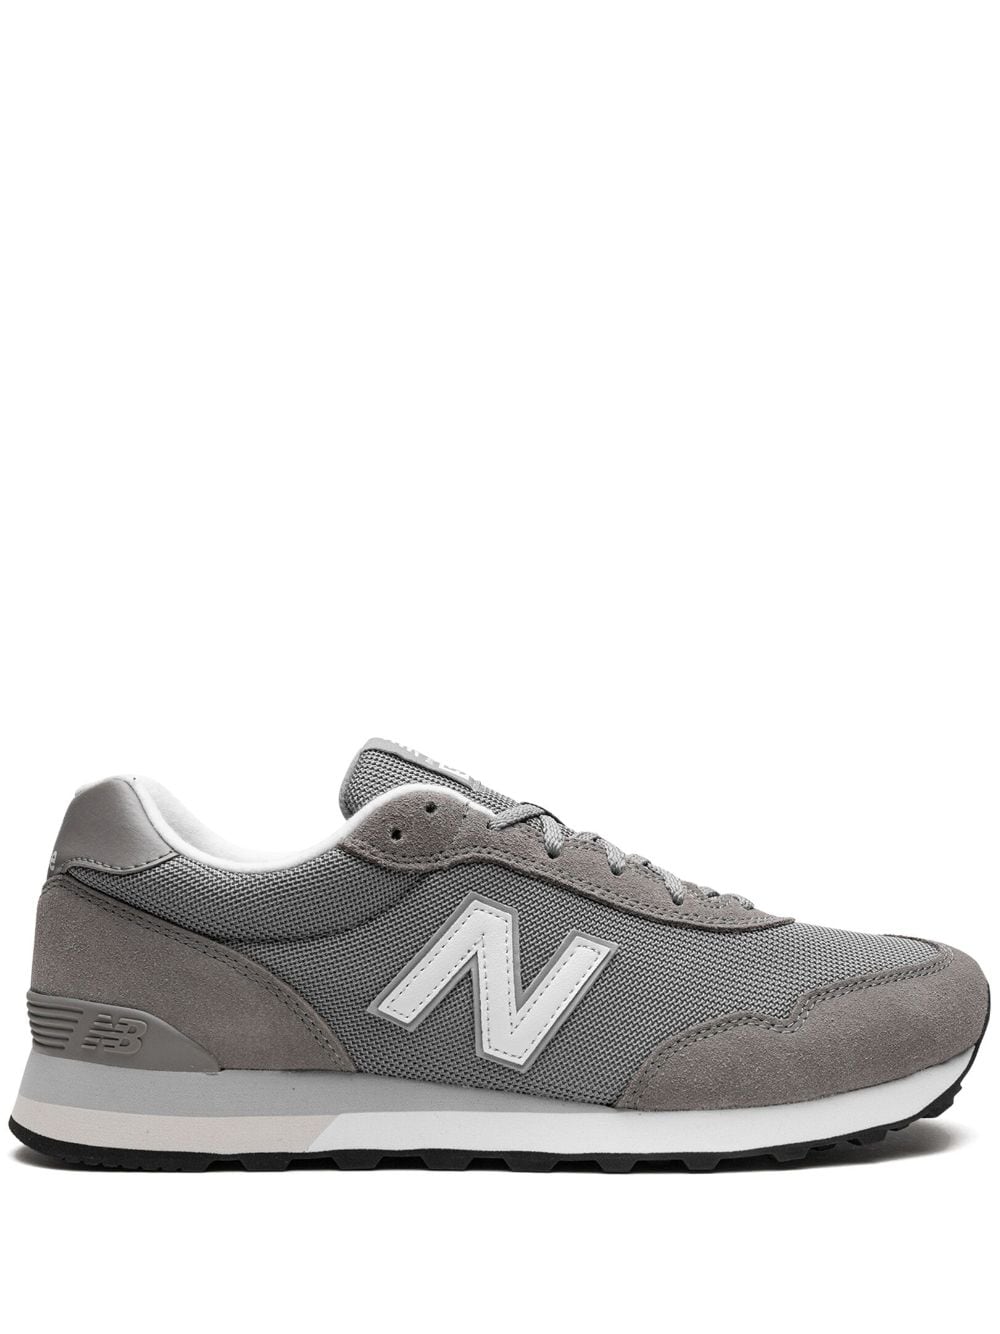 New Balance 515 "Grey/White" sneakers von New Balance